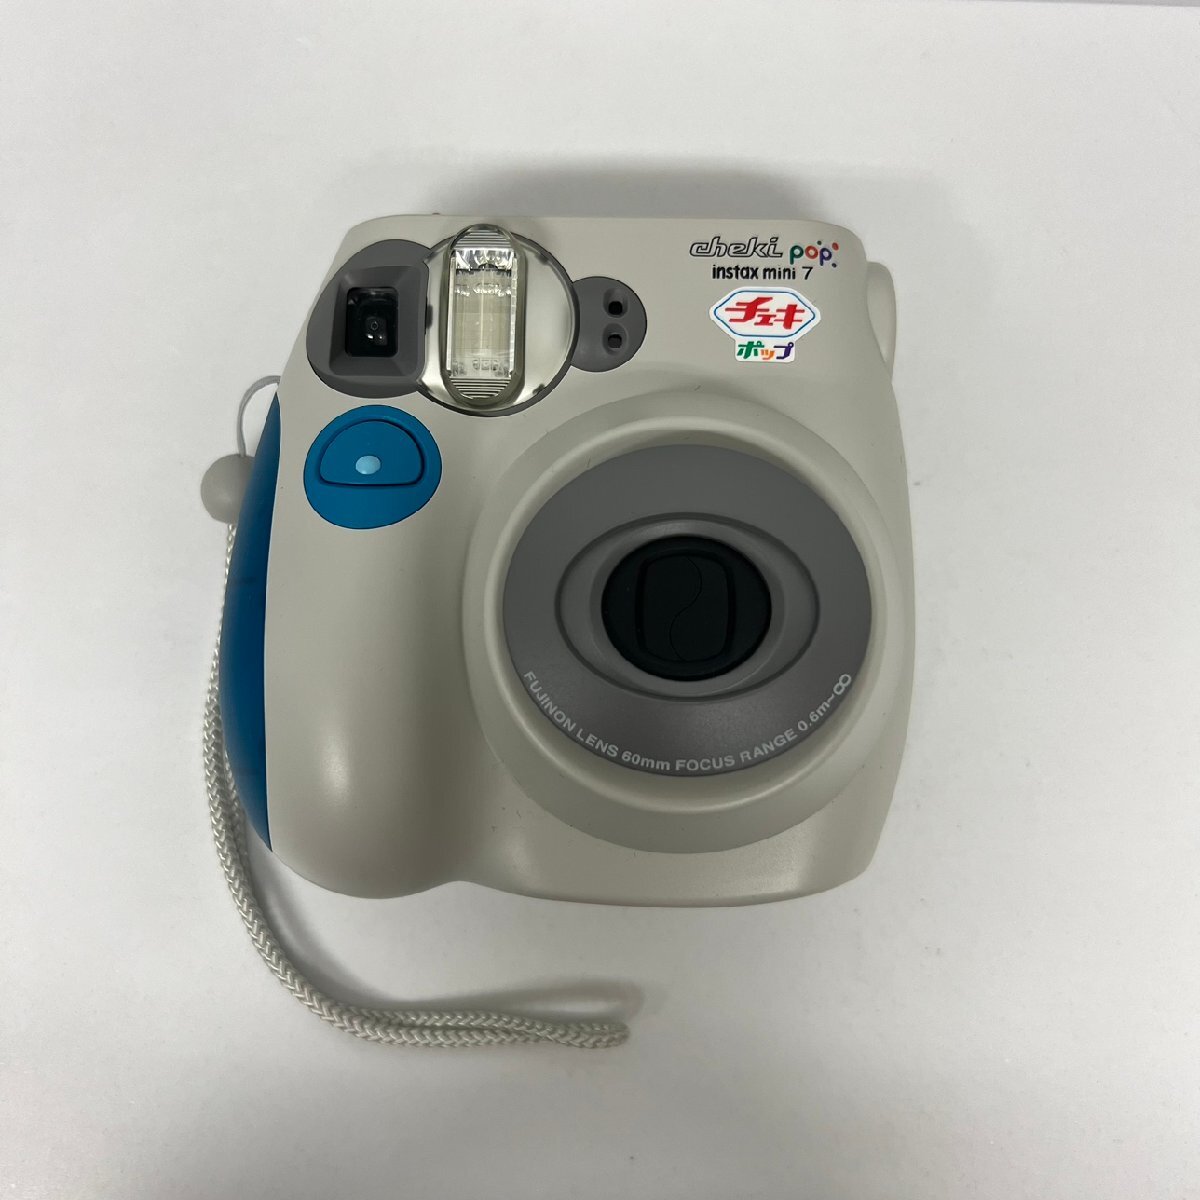 [86]FUJIFILM Fuji film instant camera Cheki pop cheki pop instax mini7 SA-0126d60 storage goods operation not yet verification 